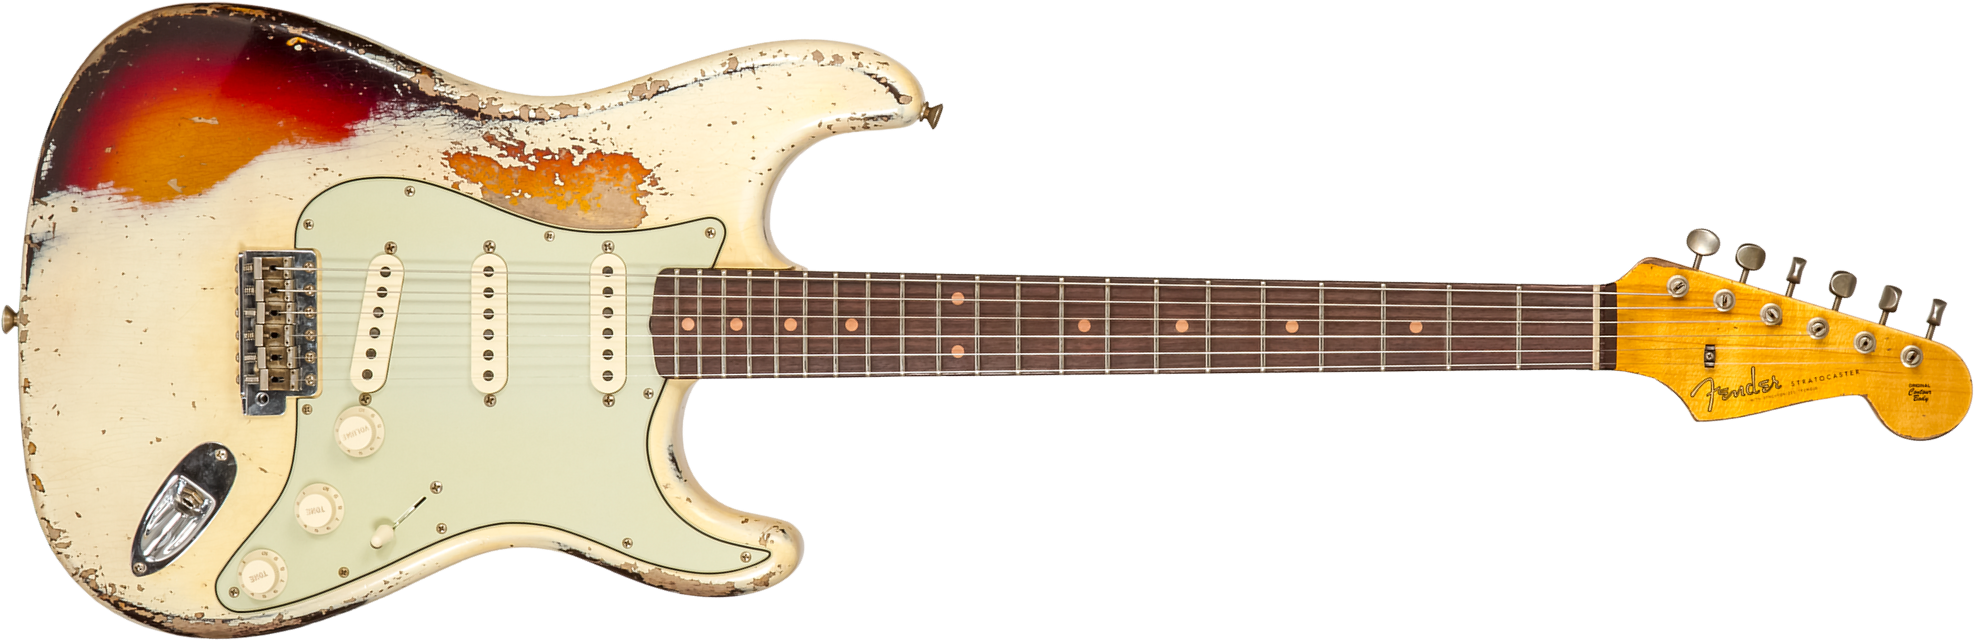 Fender Custom Shop Strat 1959 3s Trem Rw #cz576189 - Super Heavy Relic Vintage White O. 3-color Sunburs - Elektrische gitaar in Str-vorm - Main pictur